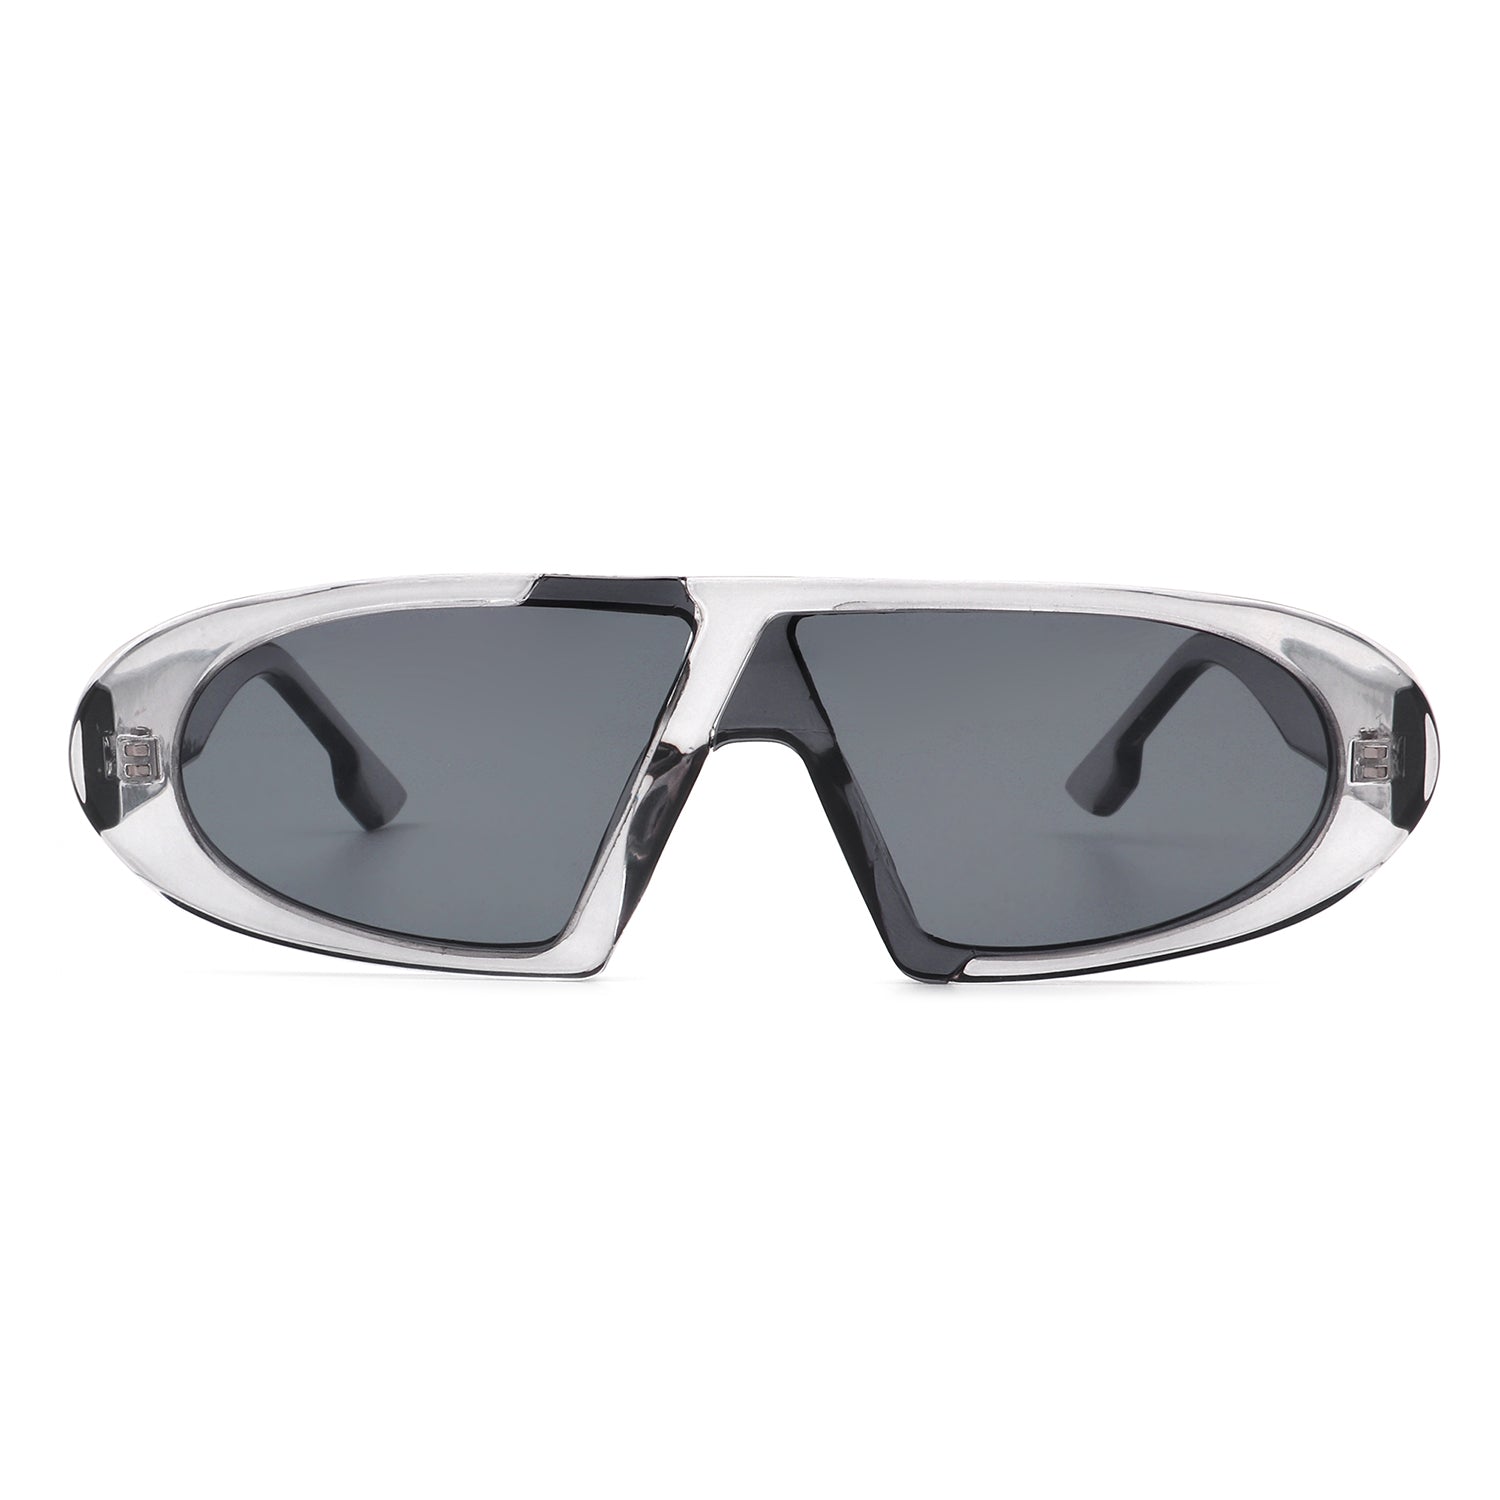 HS1034 - Oval Retro Fashion Sunglasses - Iris Inc.